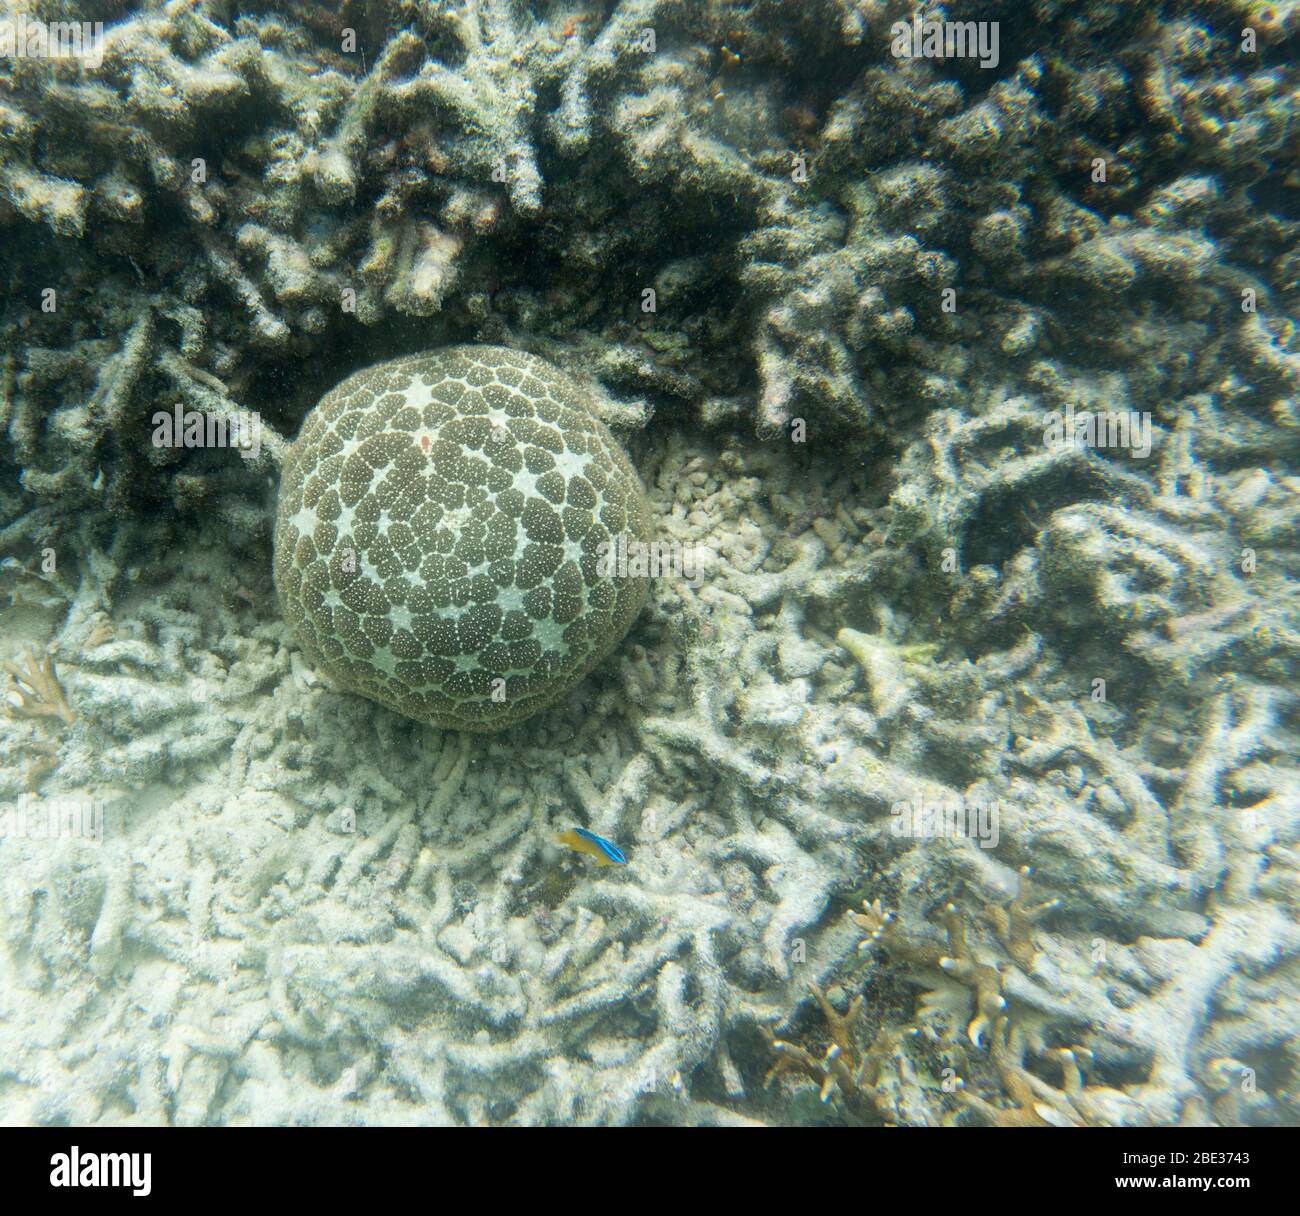 Pincushion starfish or Culcita novaeguineae in the sea of Togian islands, Indonesia Stock Photo